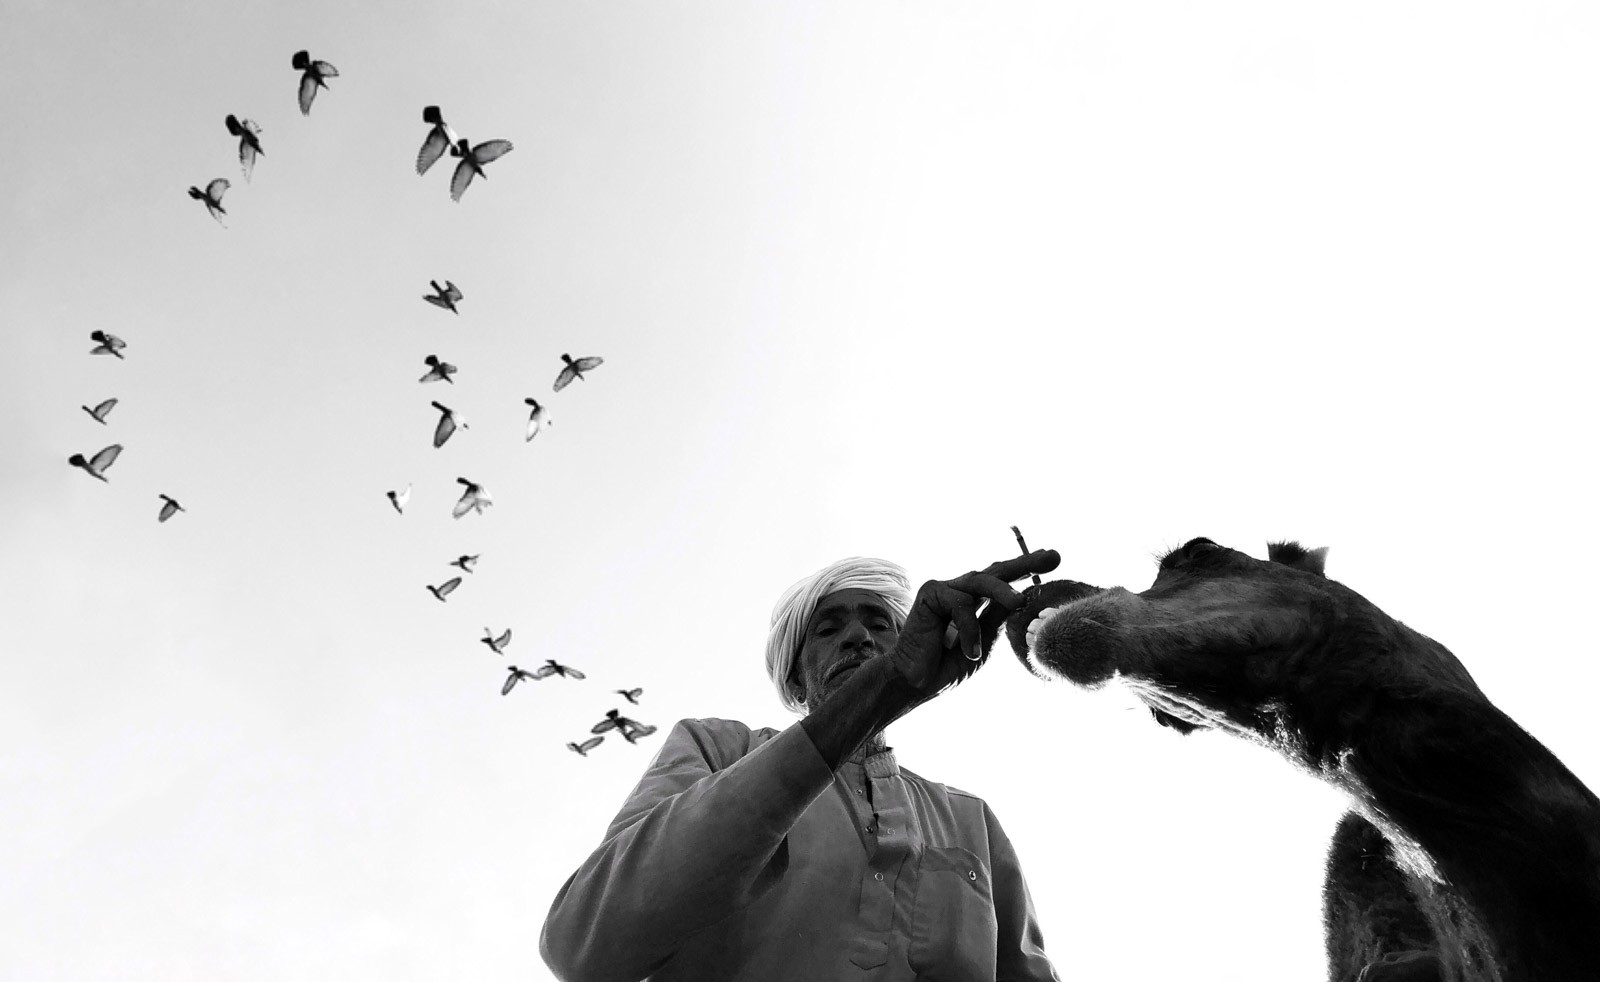 Категория Путешественник. Верблюжья ярмарка, Пушкар, Индия. Автор Димпи Бхалотия